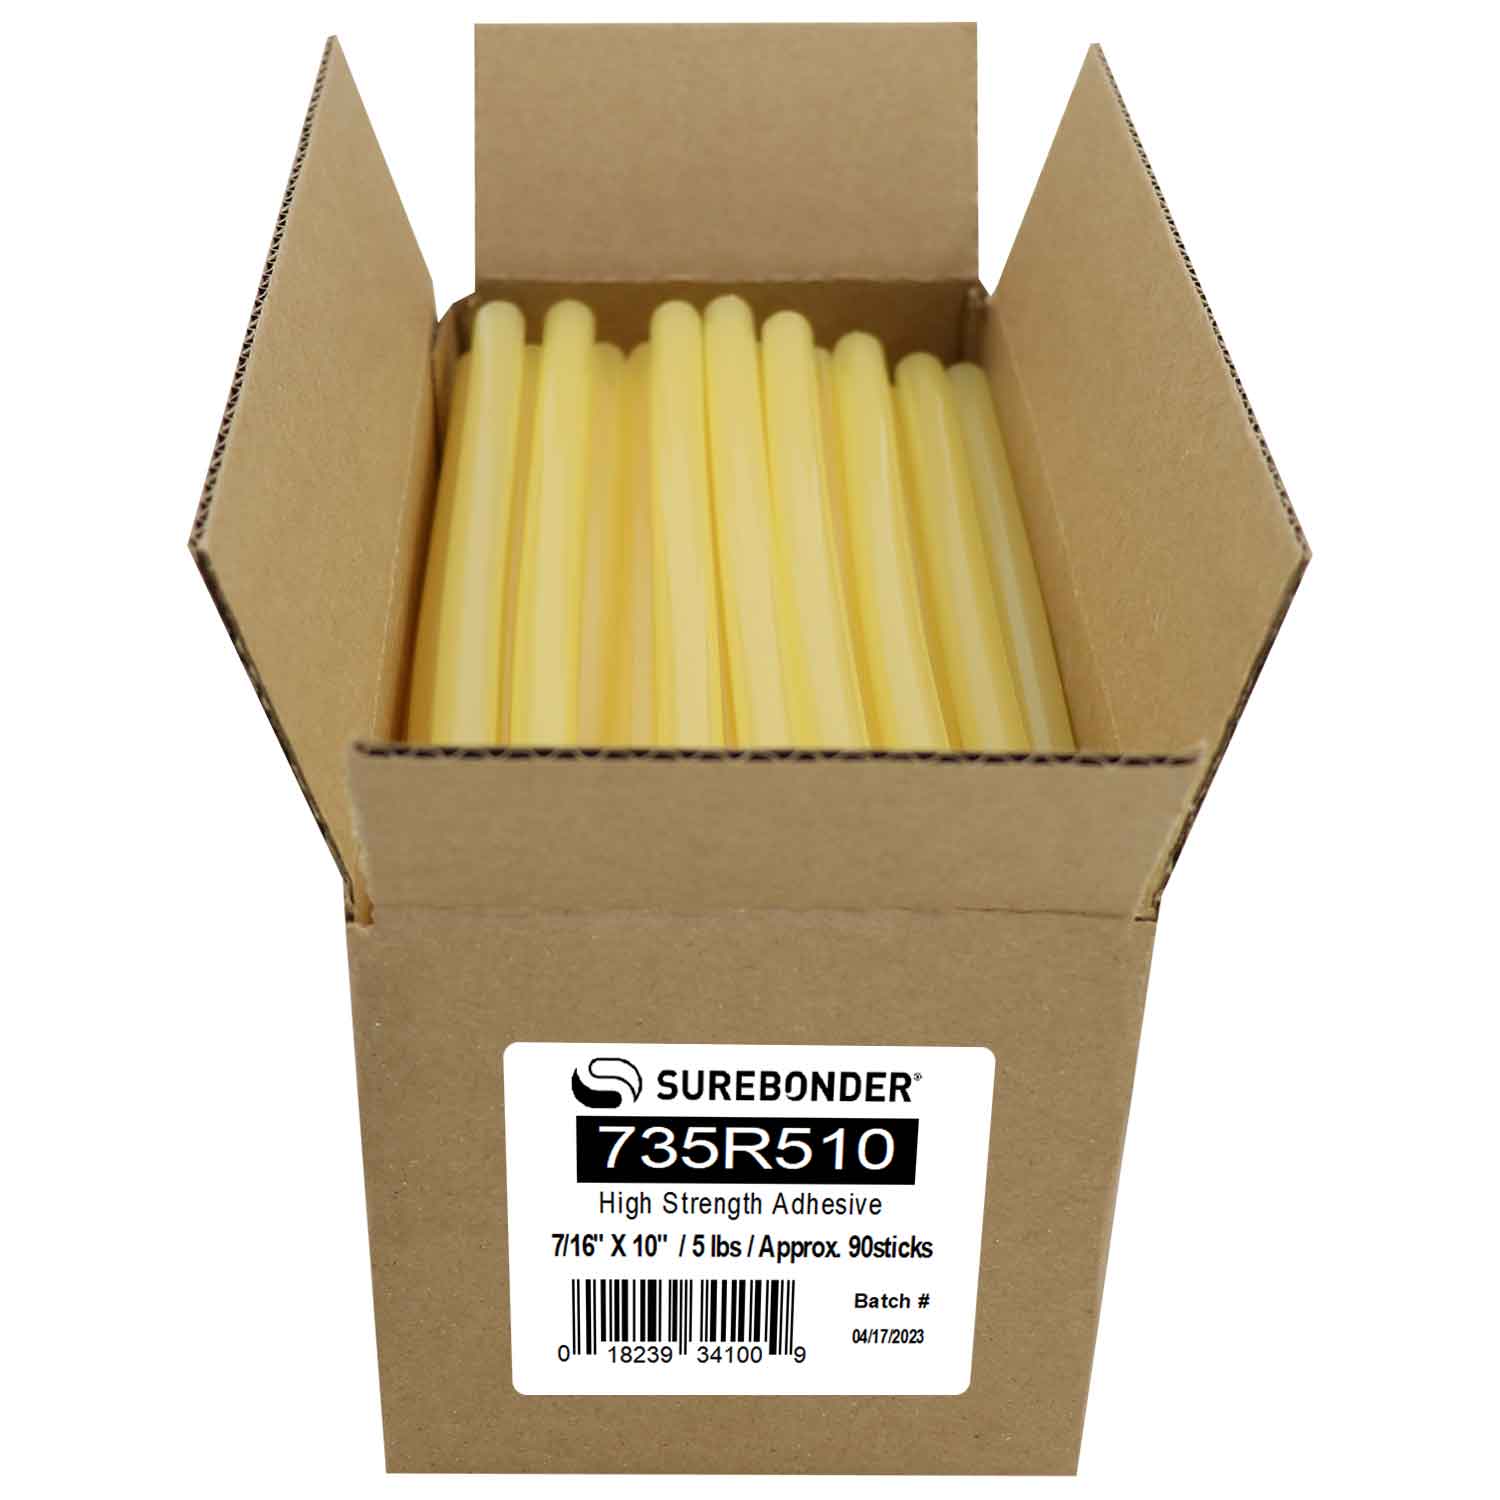 Surebonder 735R510 Full Size 10 High Strength Amber Color Hot Glue Stick - 5 lb Box